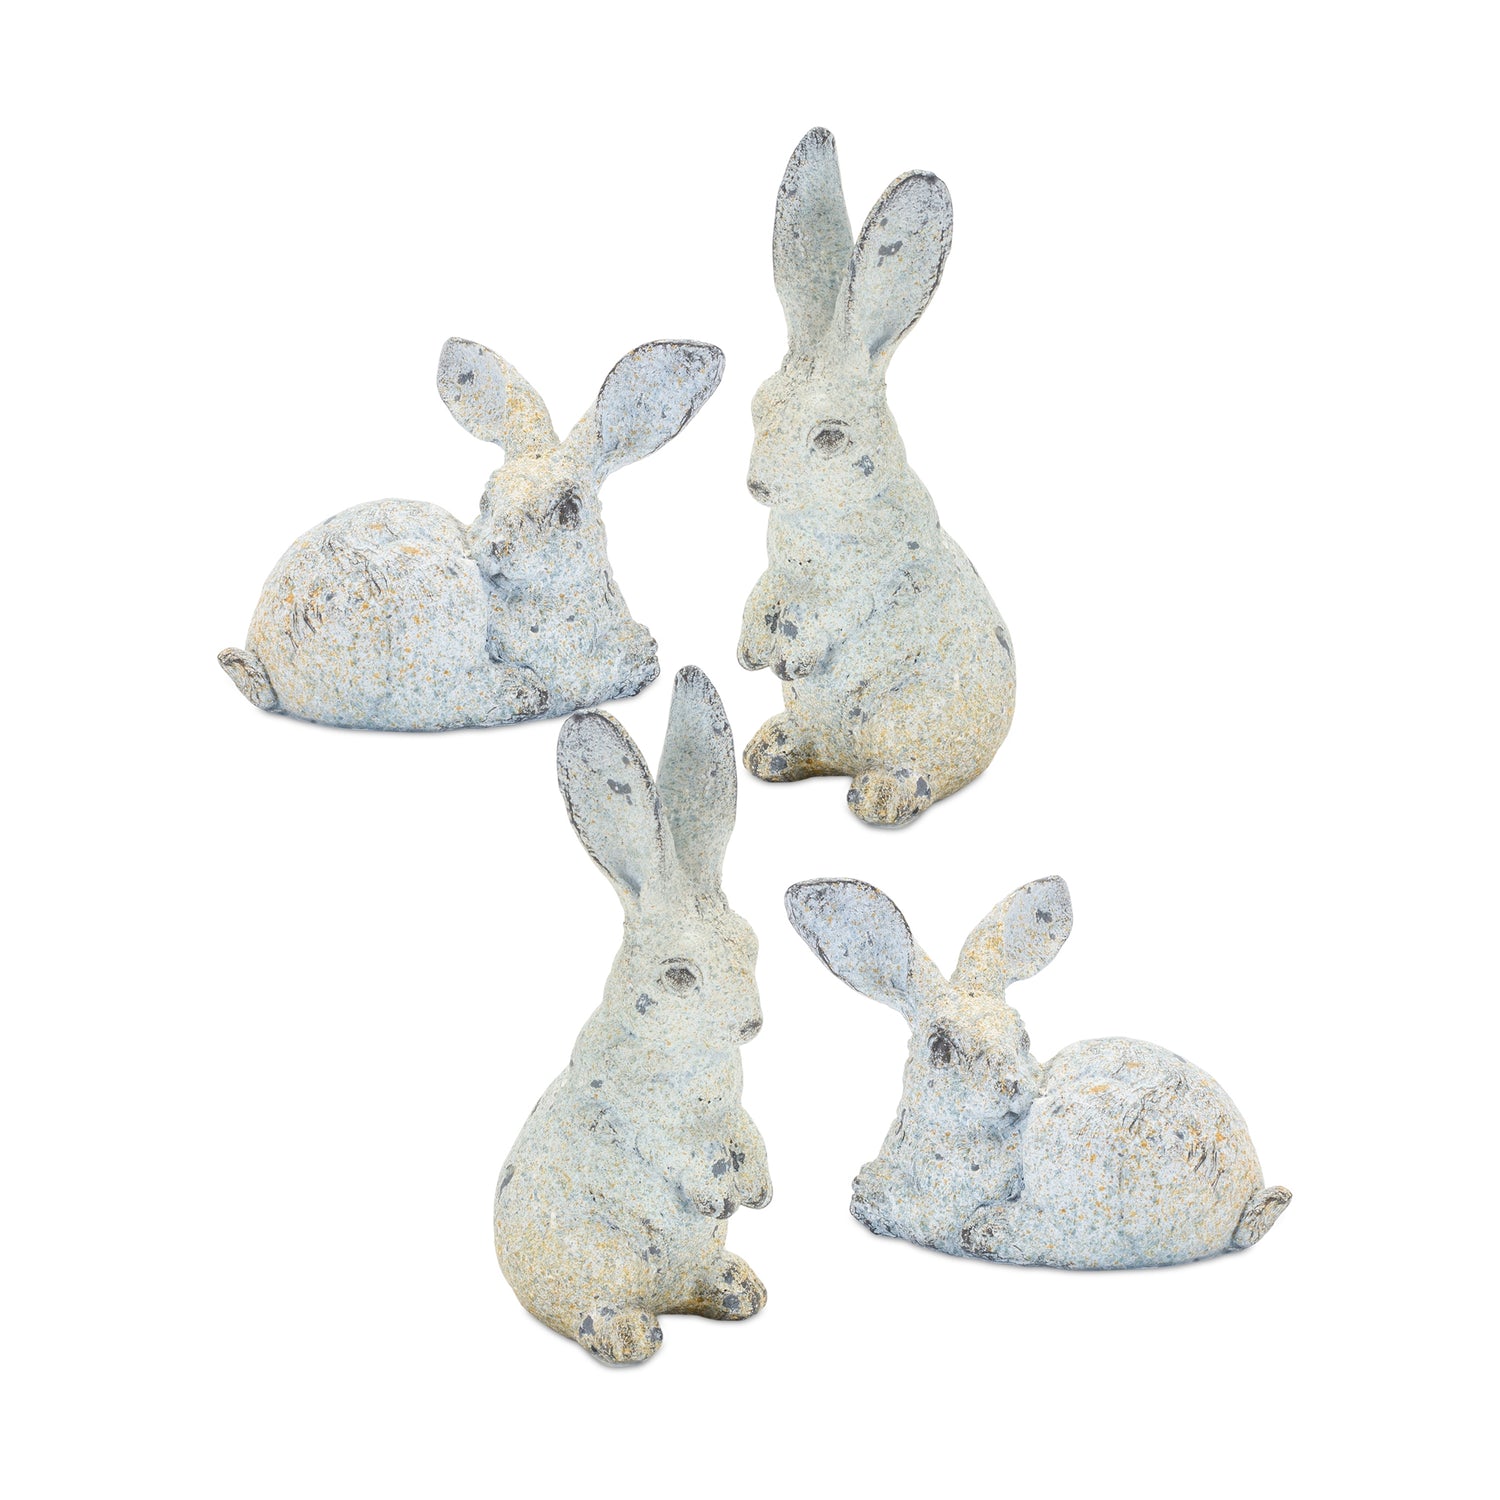 Rabbit (Set of 4) 4.5"L x 3"H, 2.75"L x 6"H Resin